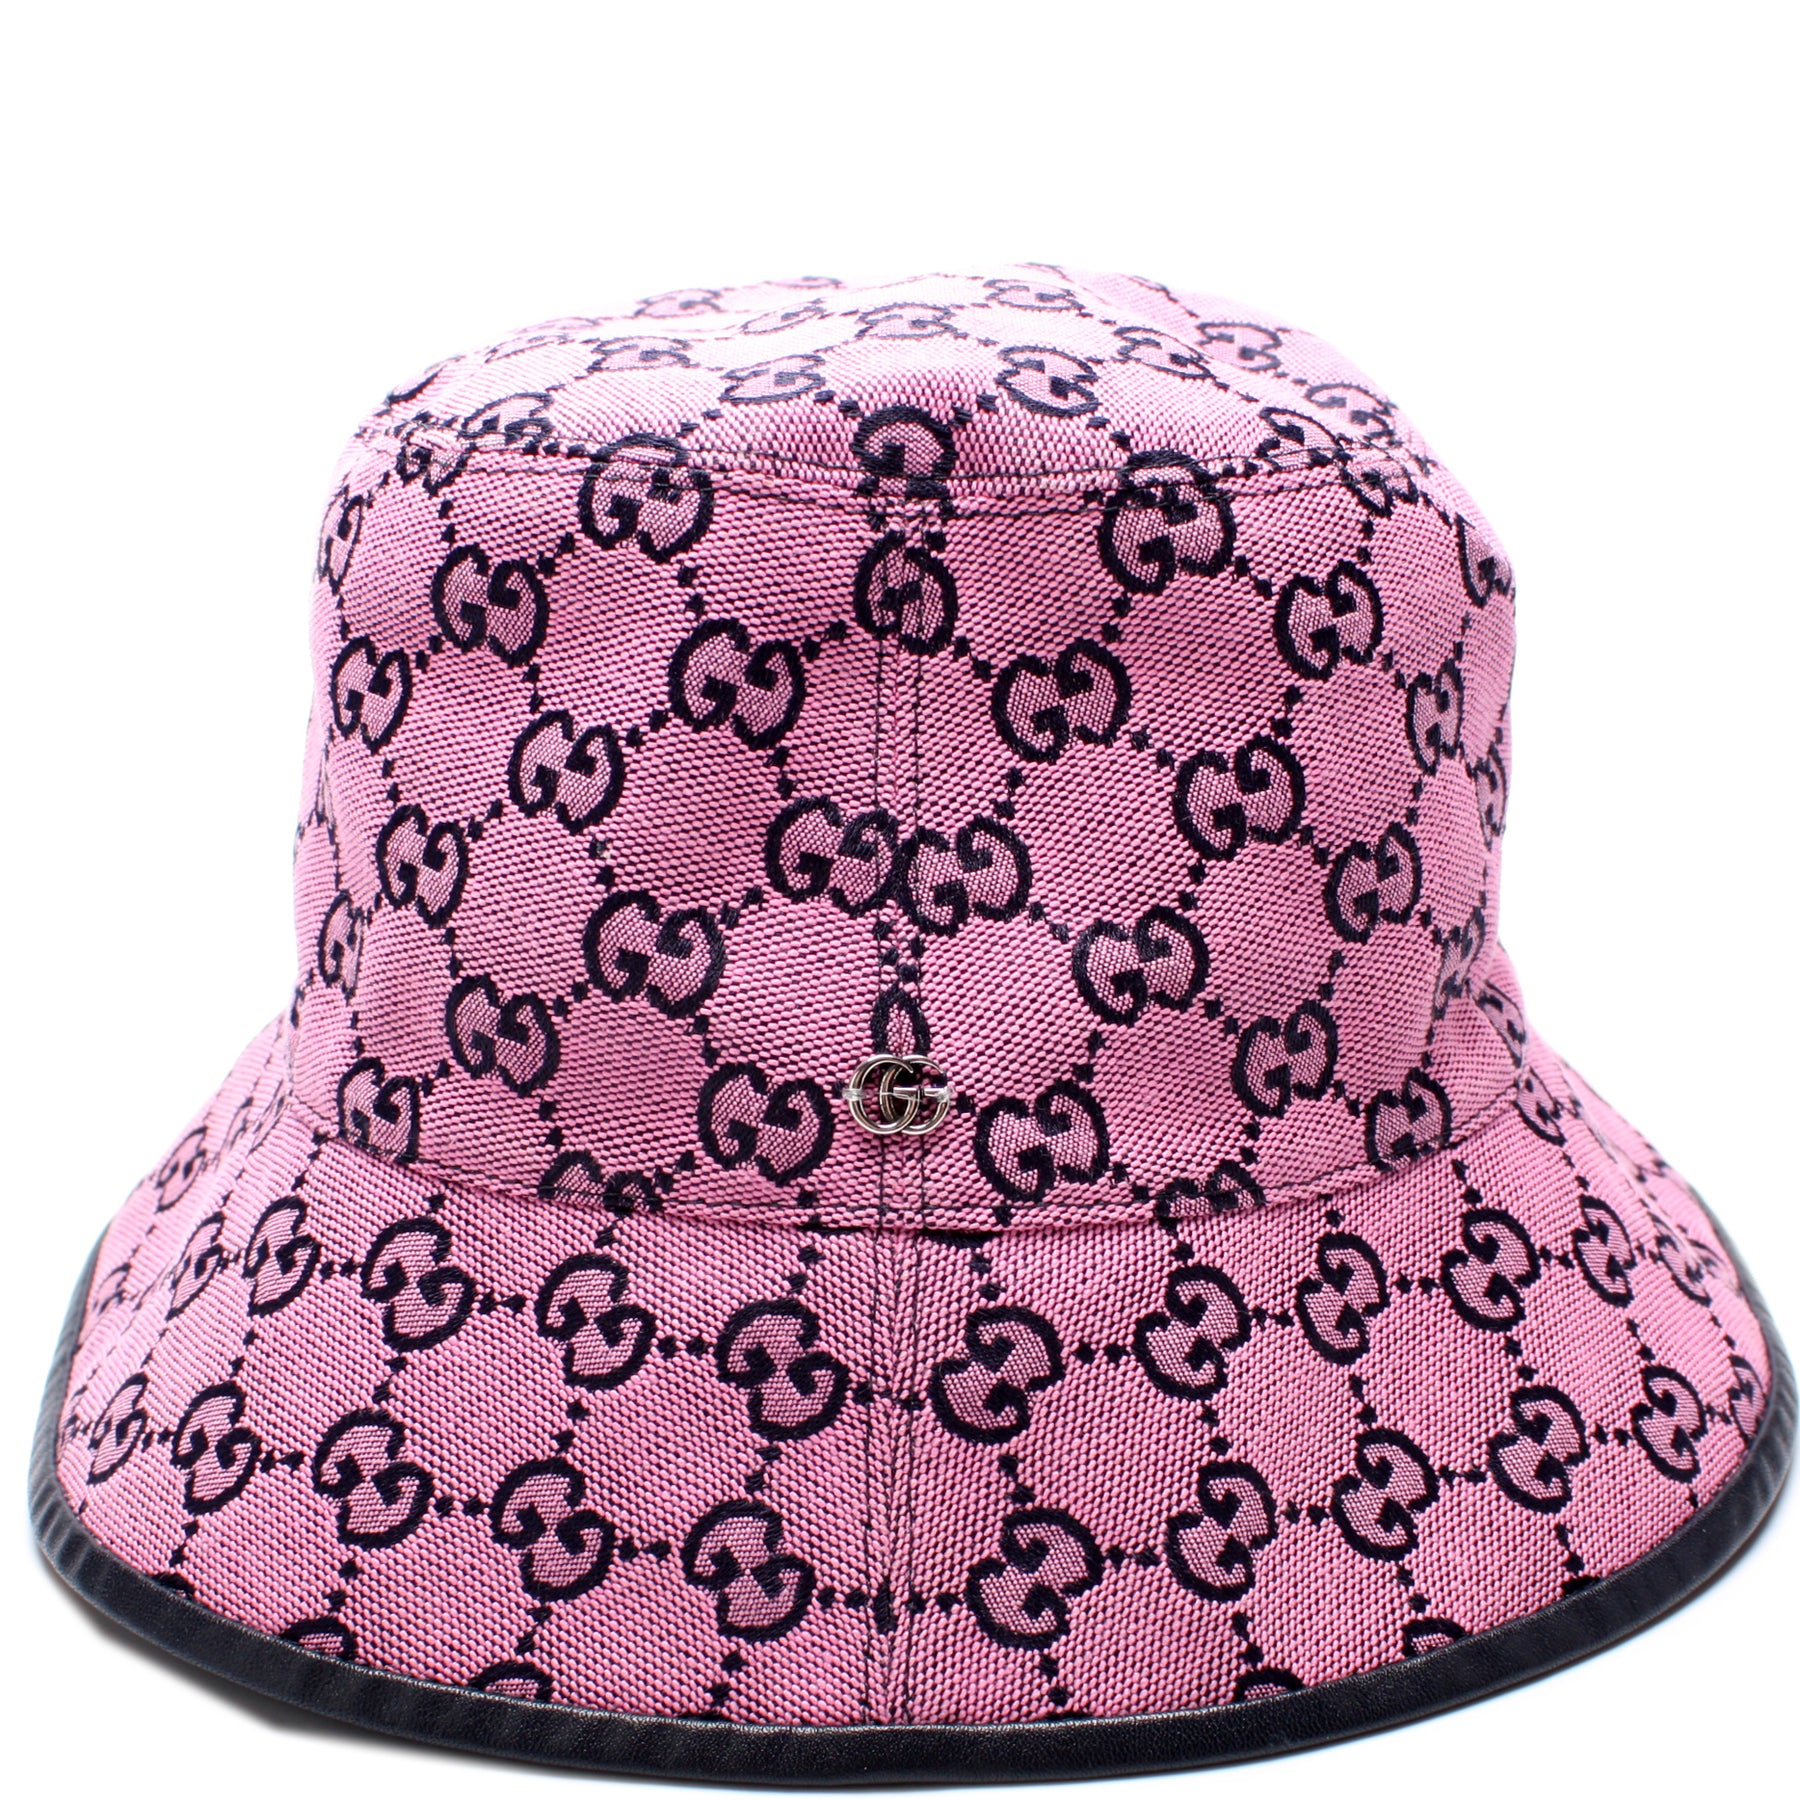 GG canvas bucket hat in pink